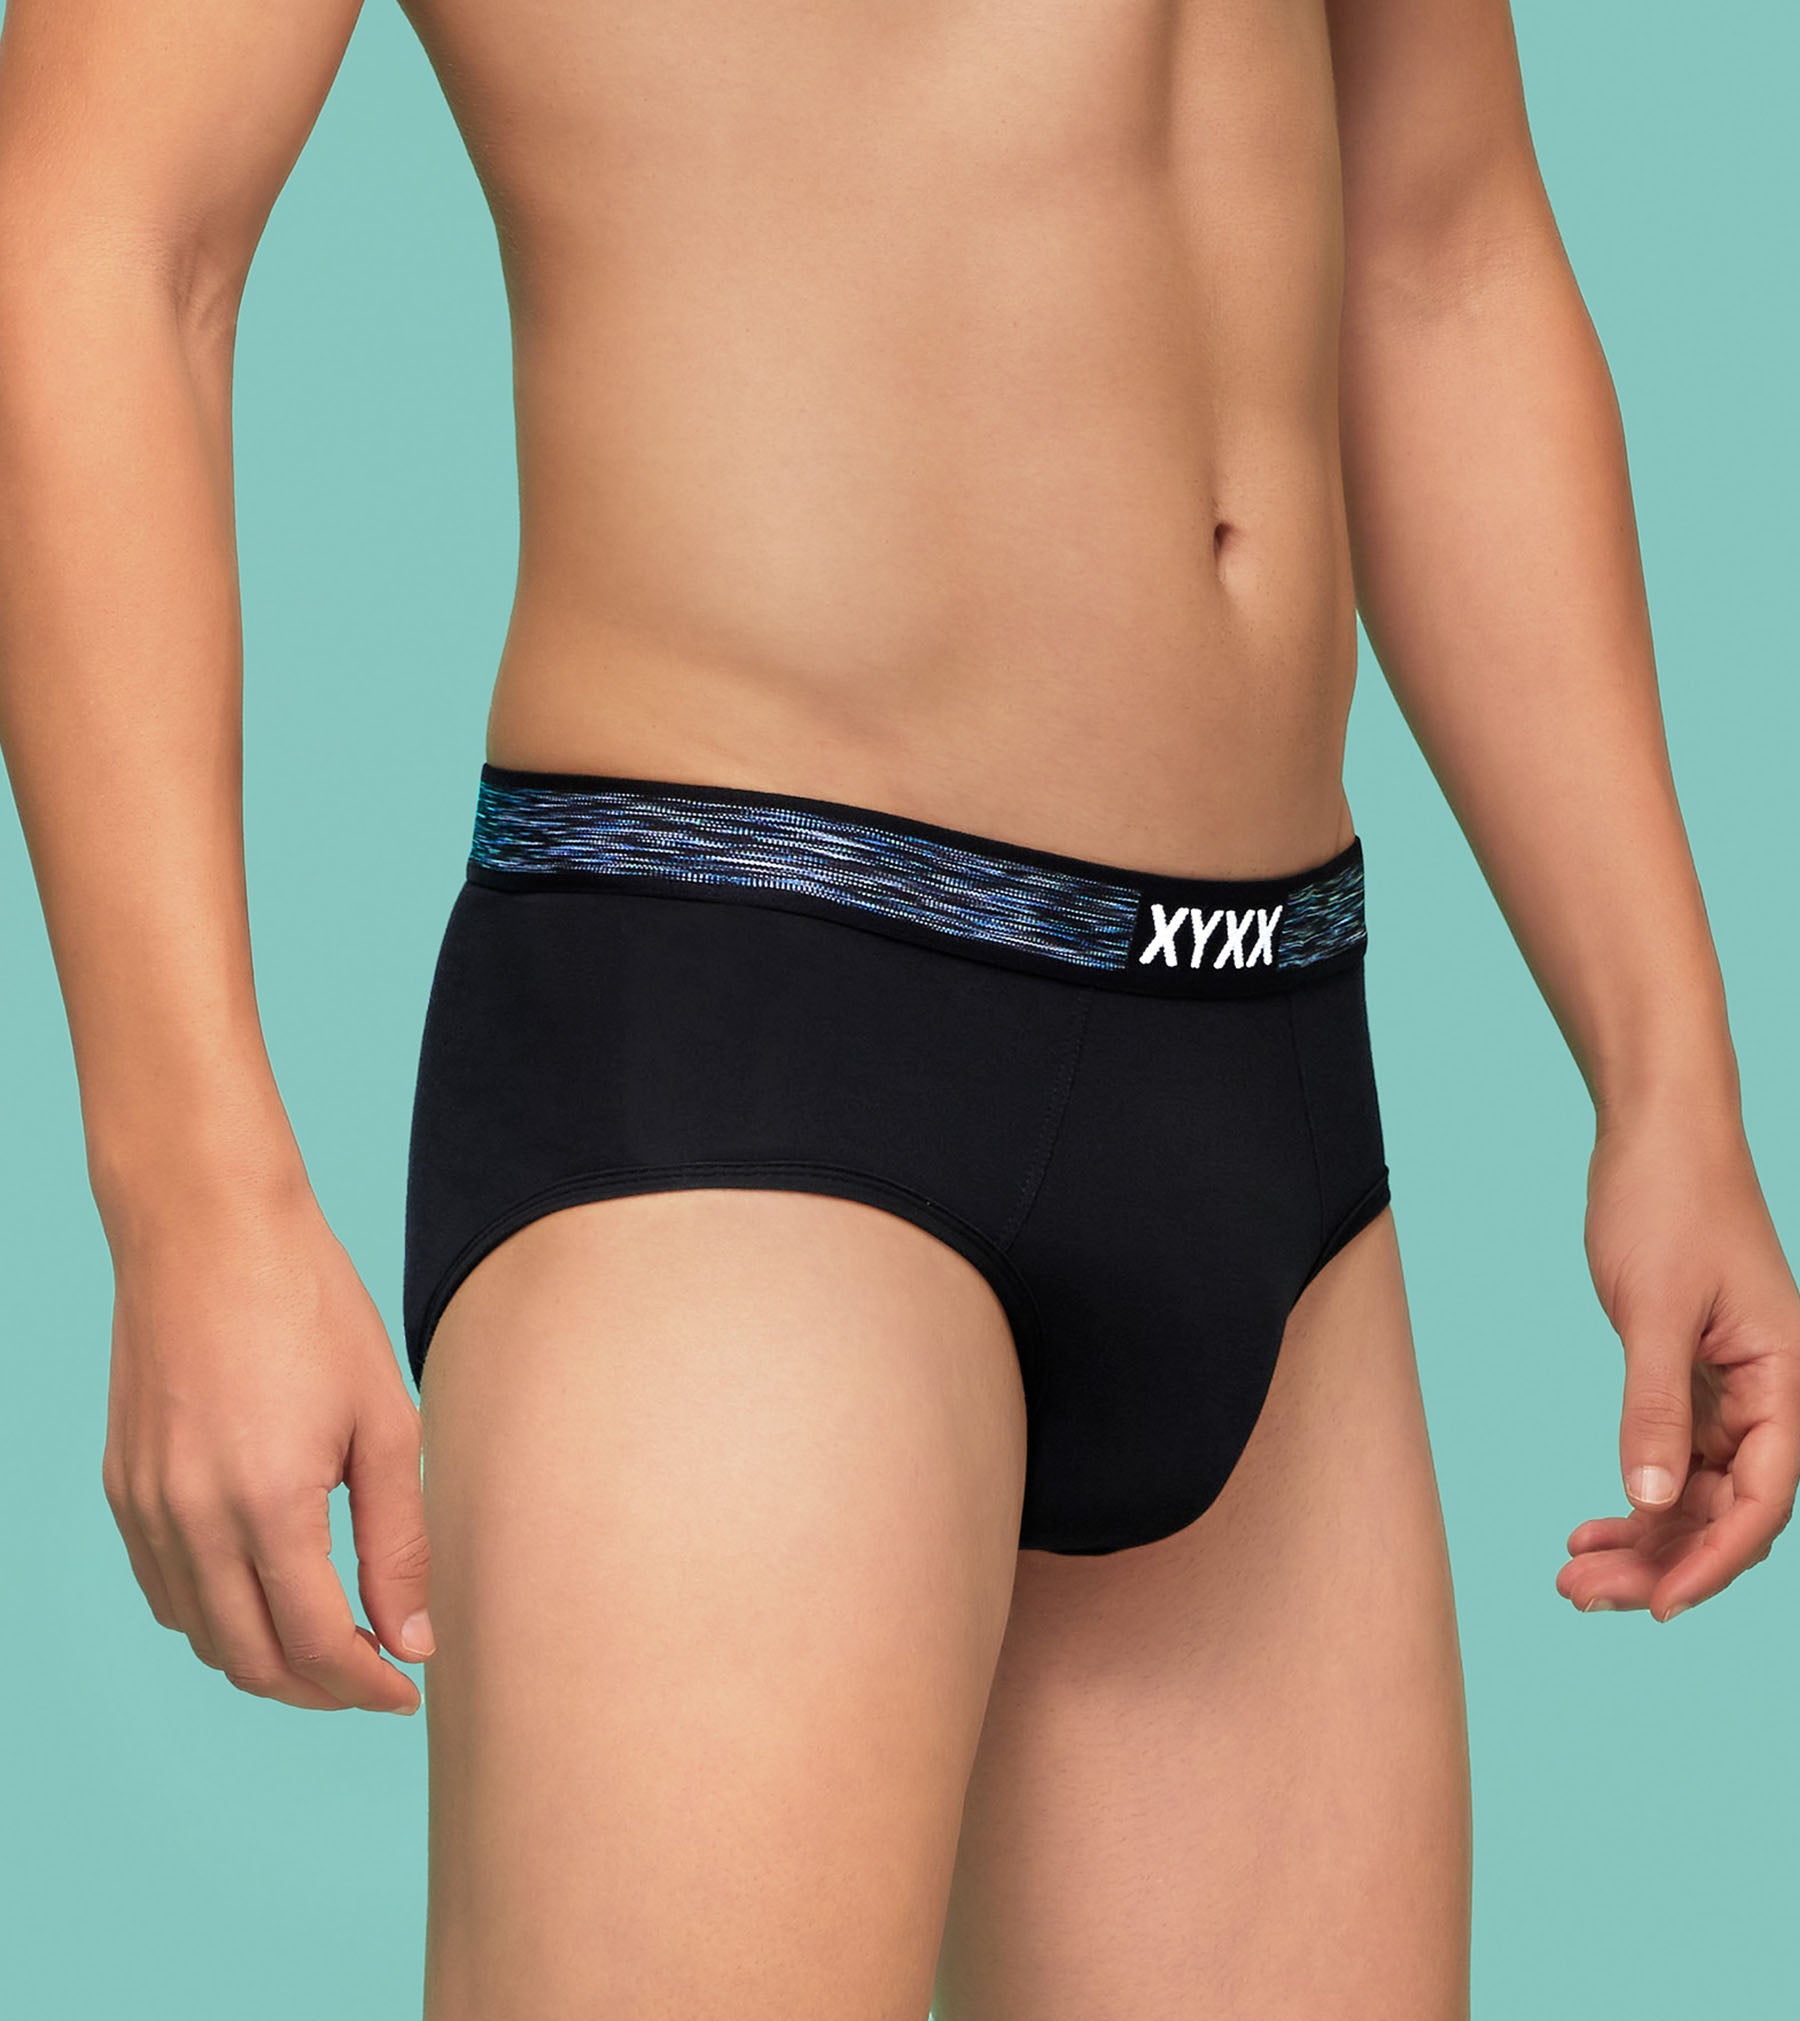 Hues Modal Briefs For Men Pack of 2 (Black, Light Blue) -  XYXX Mens Apparels